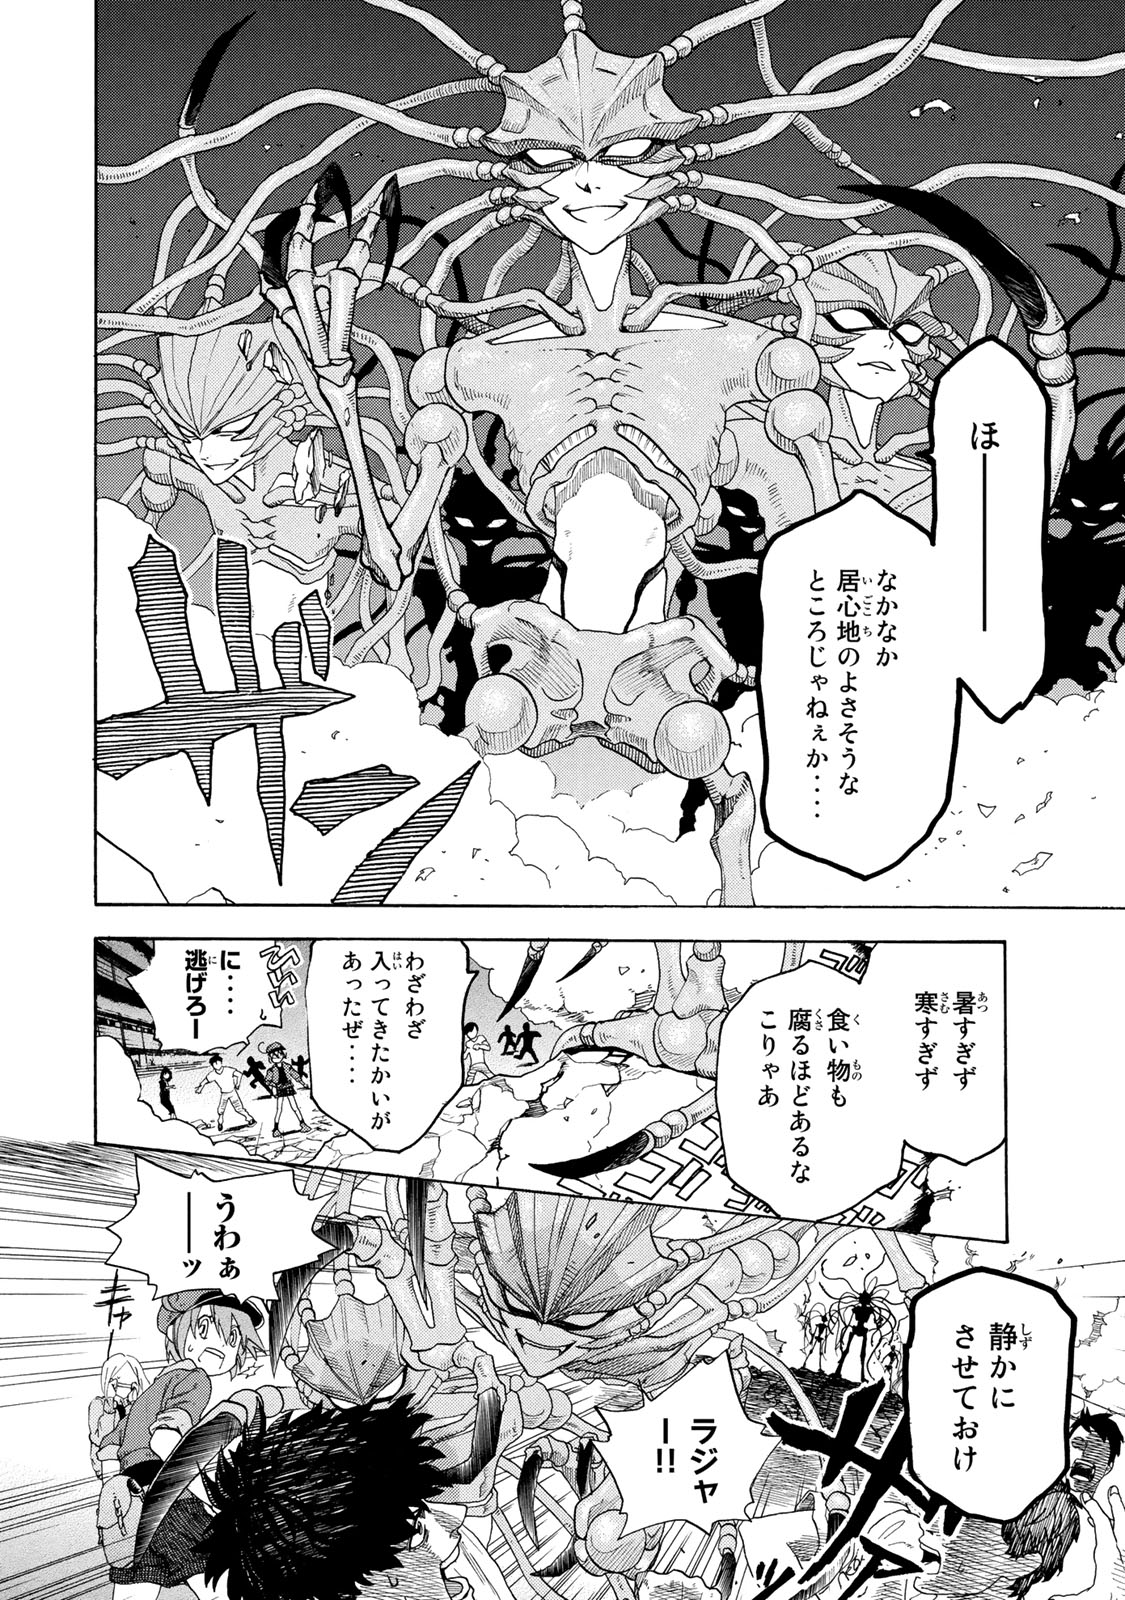 Hataraku Saibou - Chapter 1 - Page 8